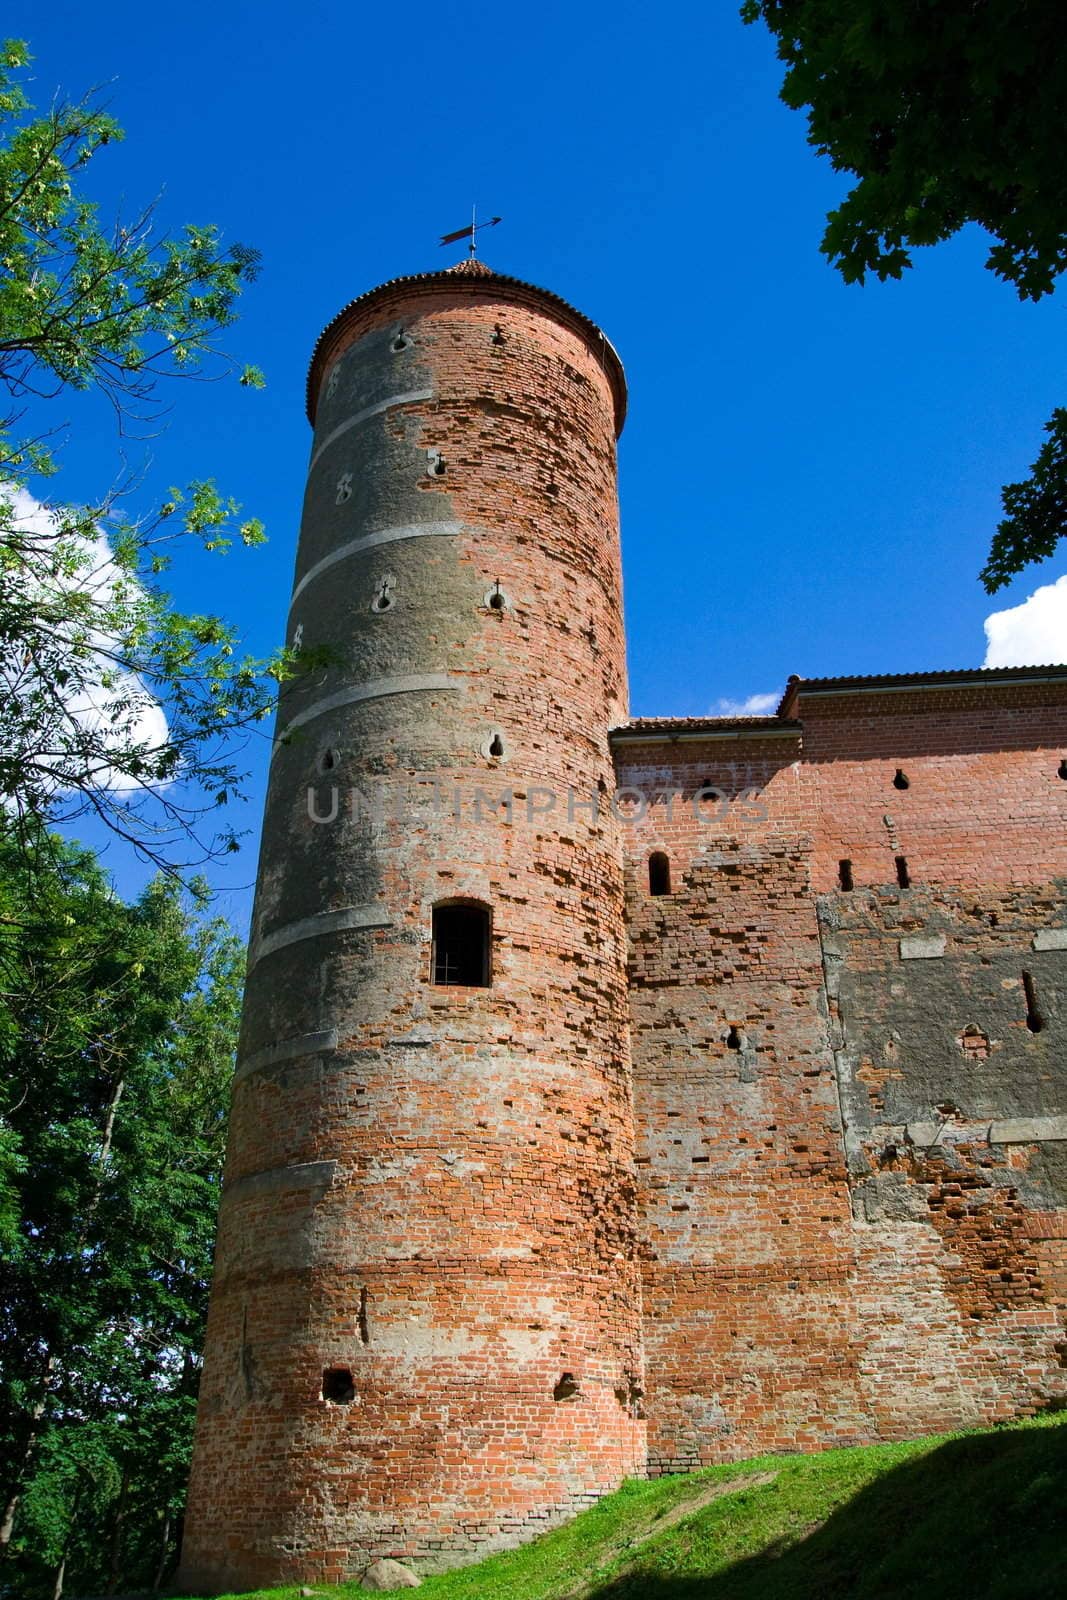 Tower of castle Panemune against blue sky